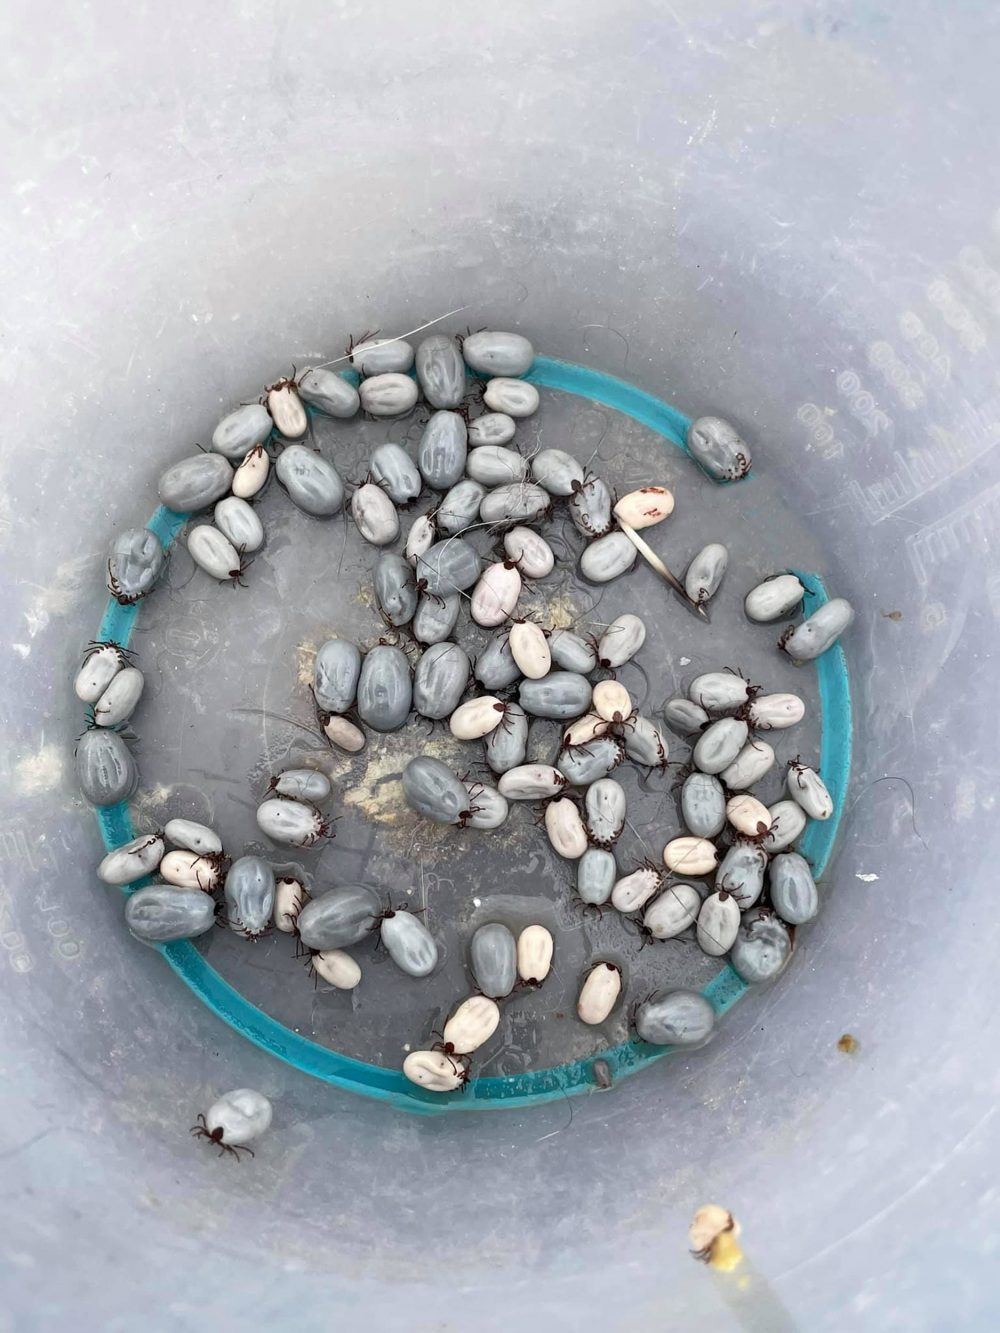 Bucket filled with 44 grams of ticks | Wildlife News UK